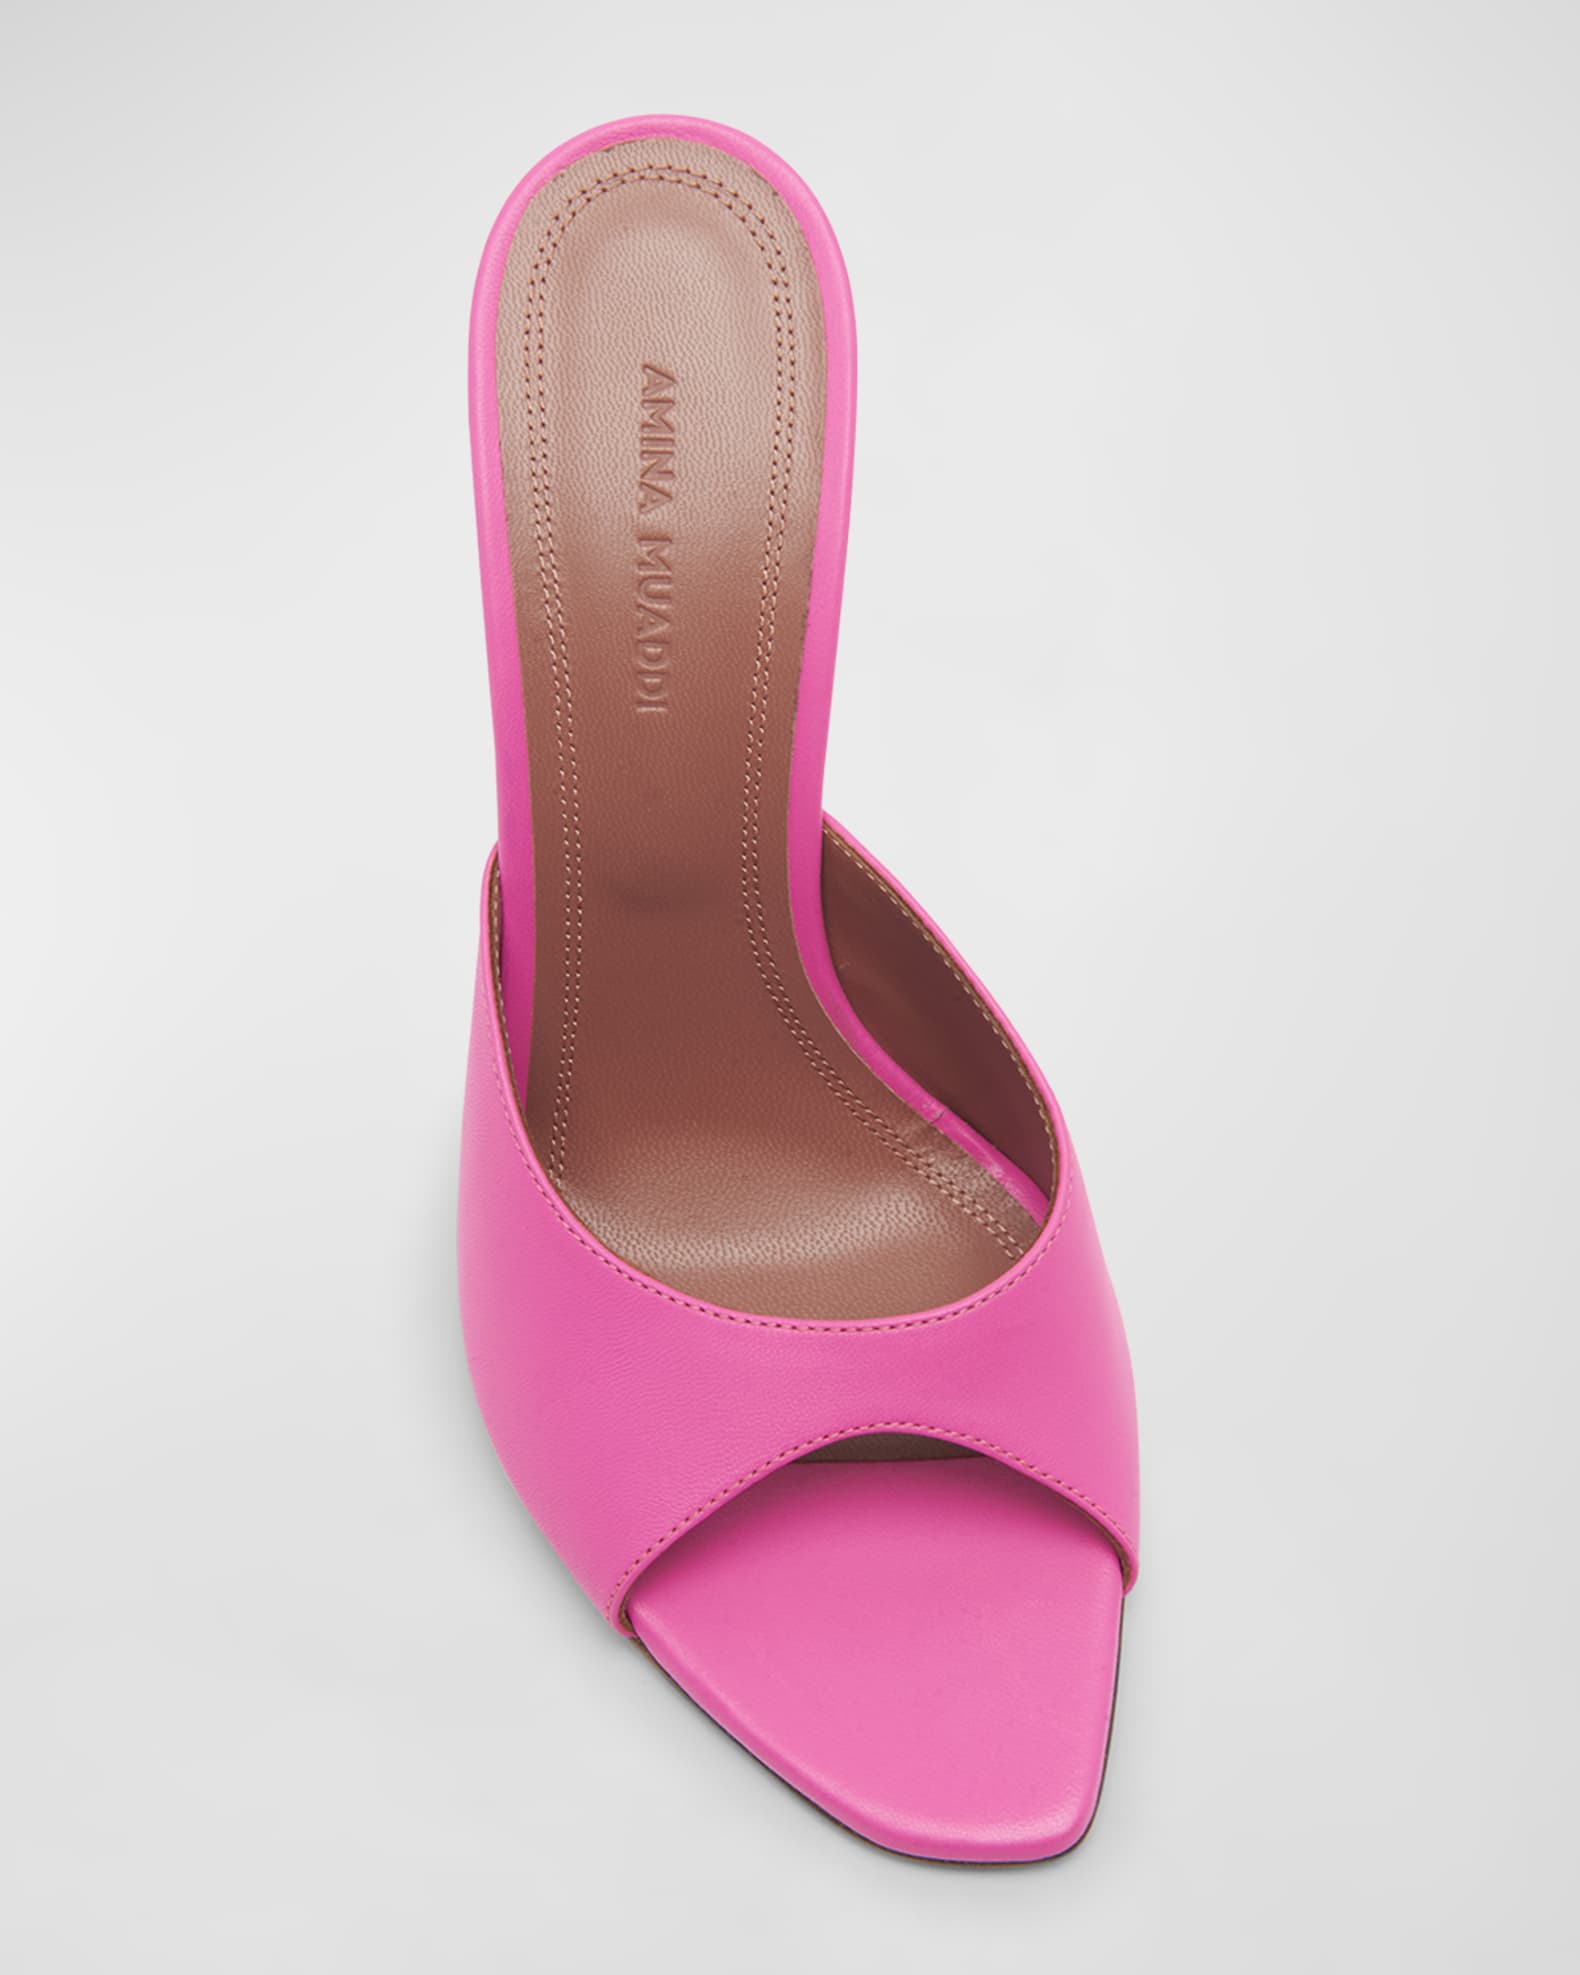 Amina Muaddi Alexa Leather Stiletto Mule Sandals | Neiman Marcus